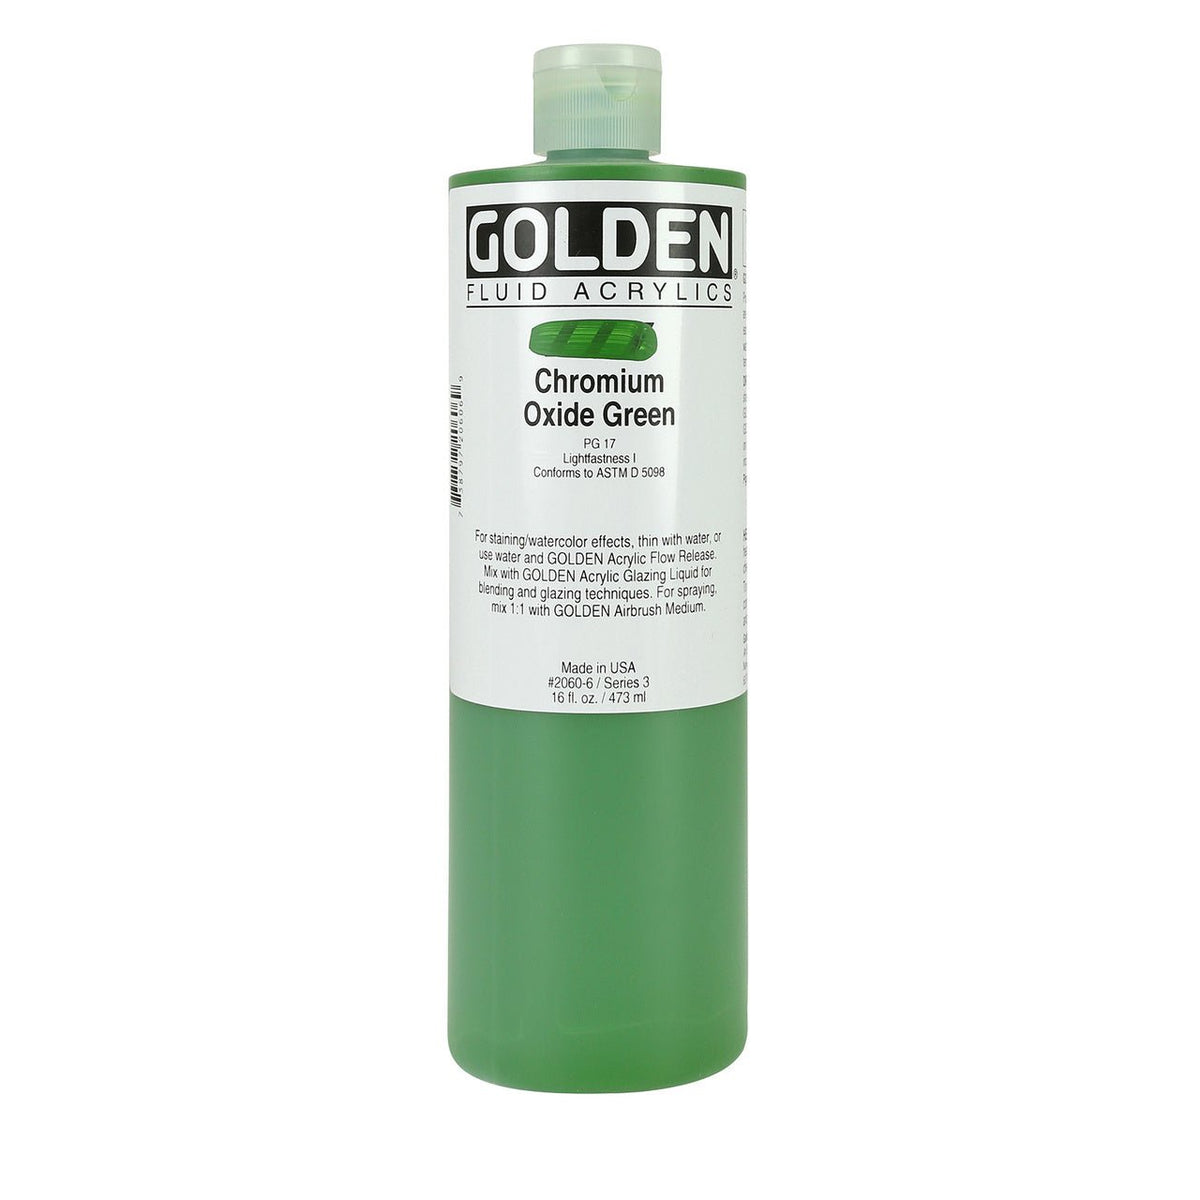 Golden Fluid Acrylic Chromium Oxide Green 16 oz - merriartist.com